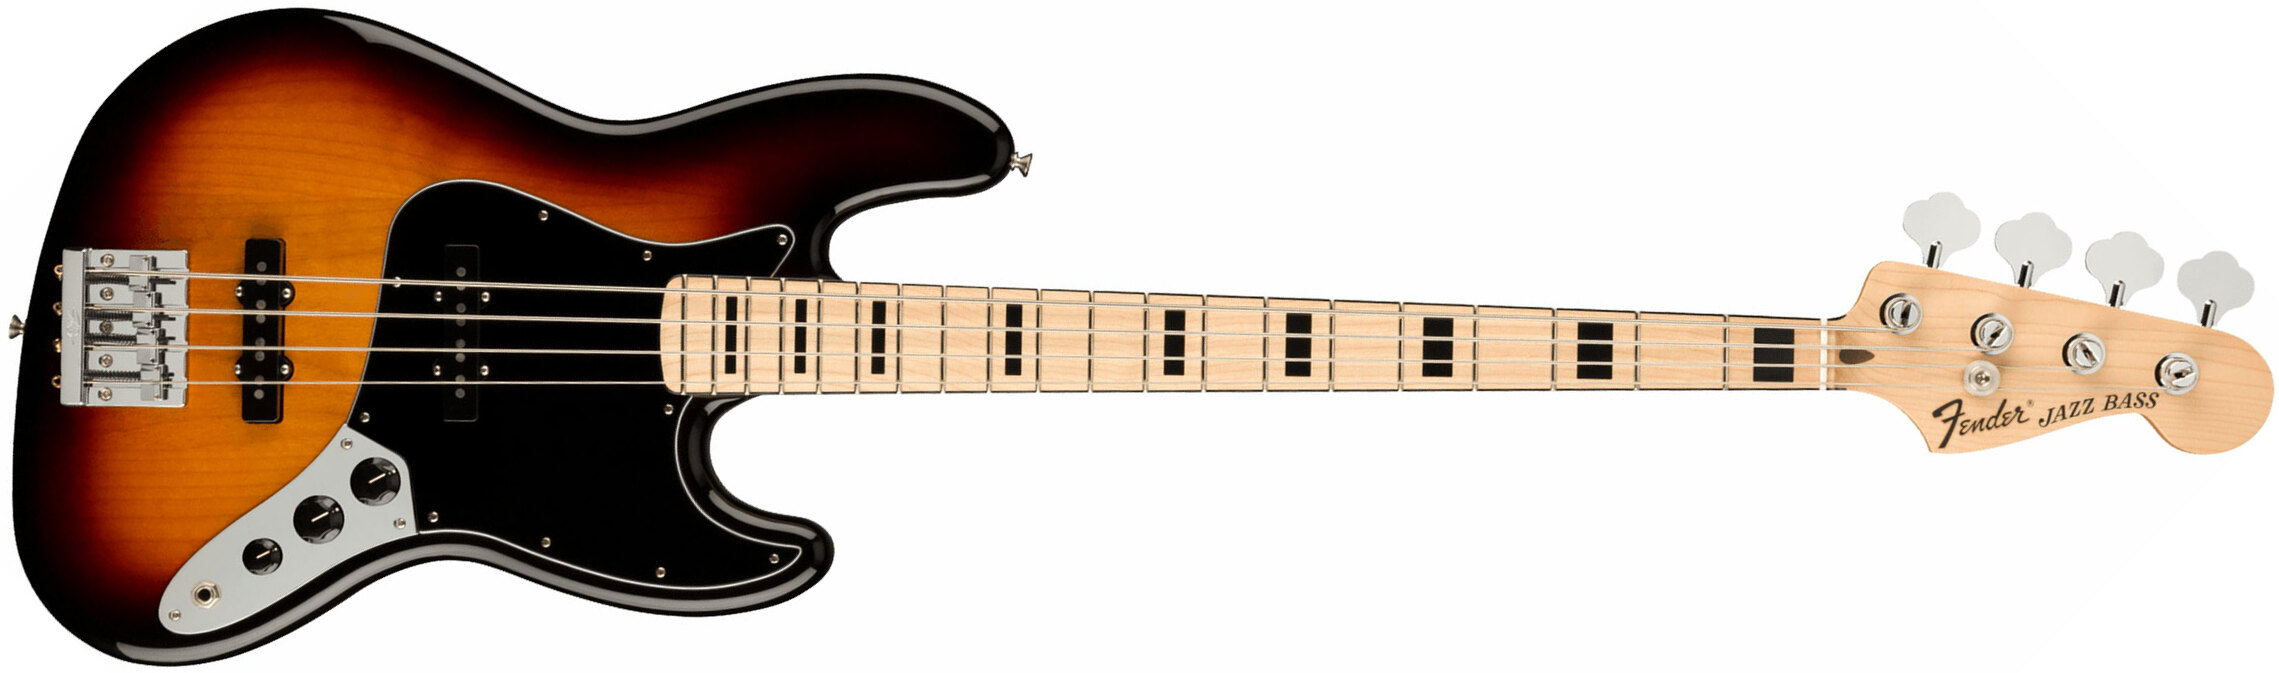 Fender Geddy Lee Jazz Bass Signature Mex Mn - 3-color Sunburst - Solid body elektrische bas - Main picture